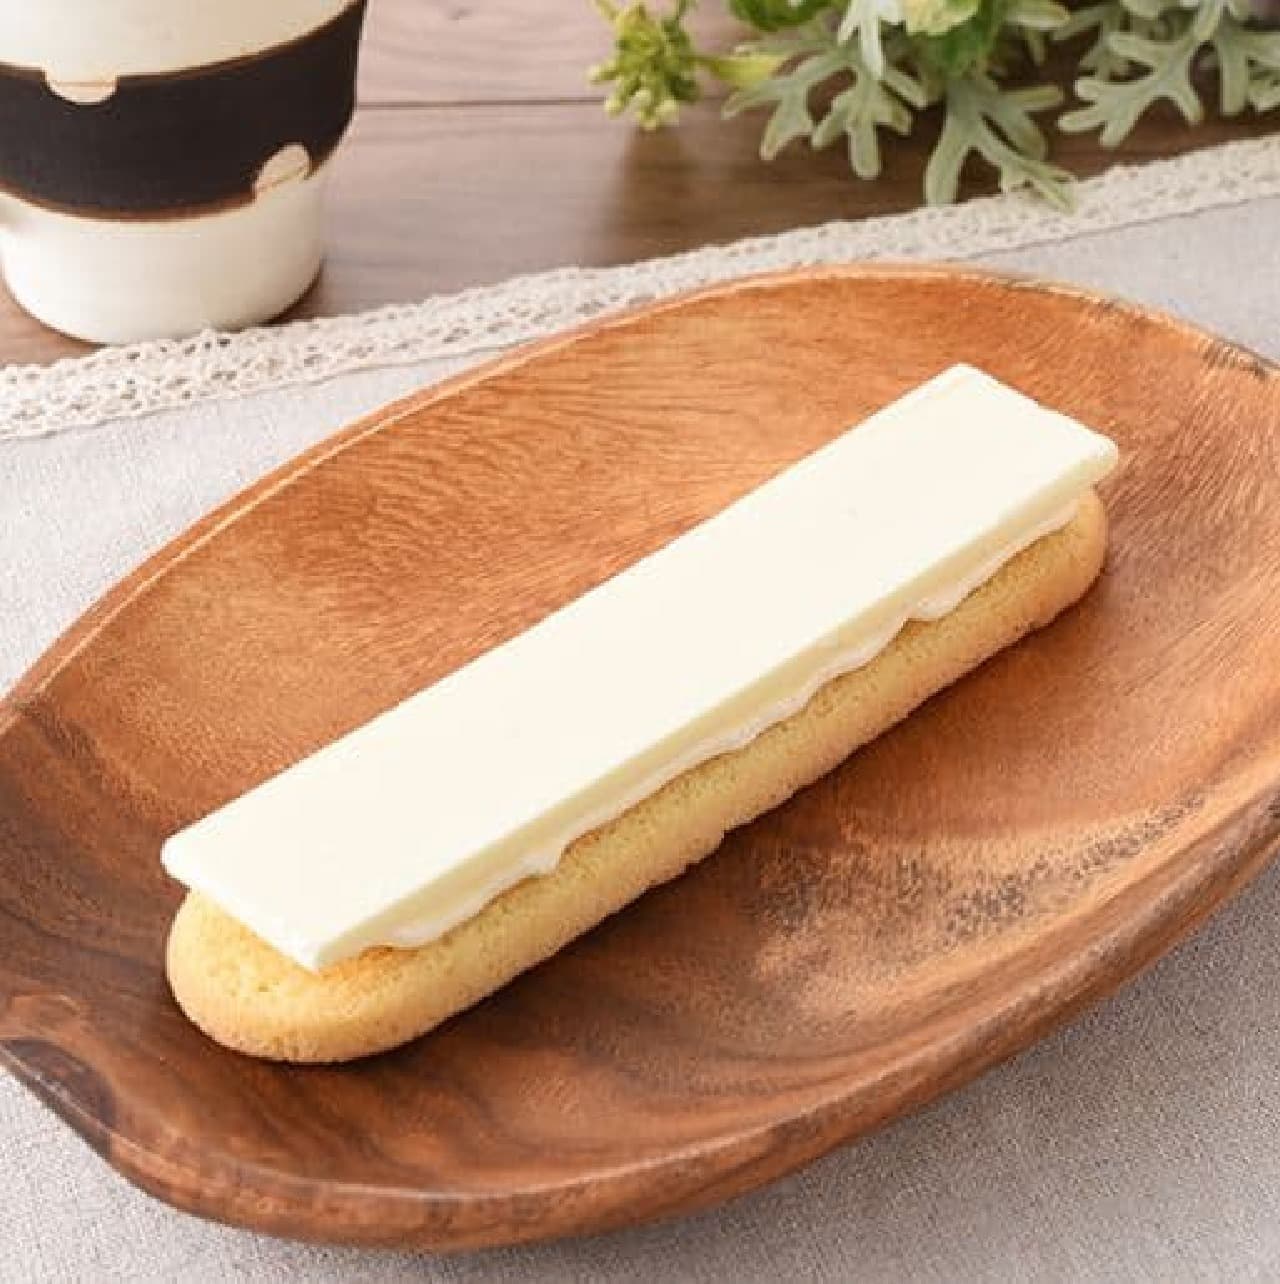 FamilyMart "Fuwahoro Air In Chocolate Sandwich (Cheese)"